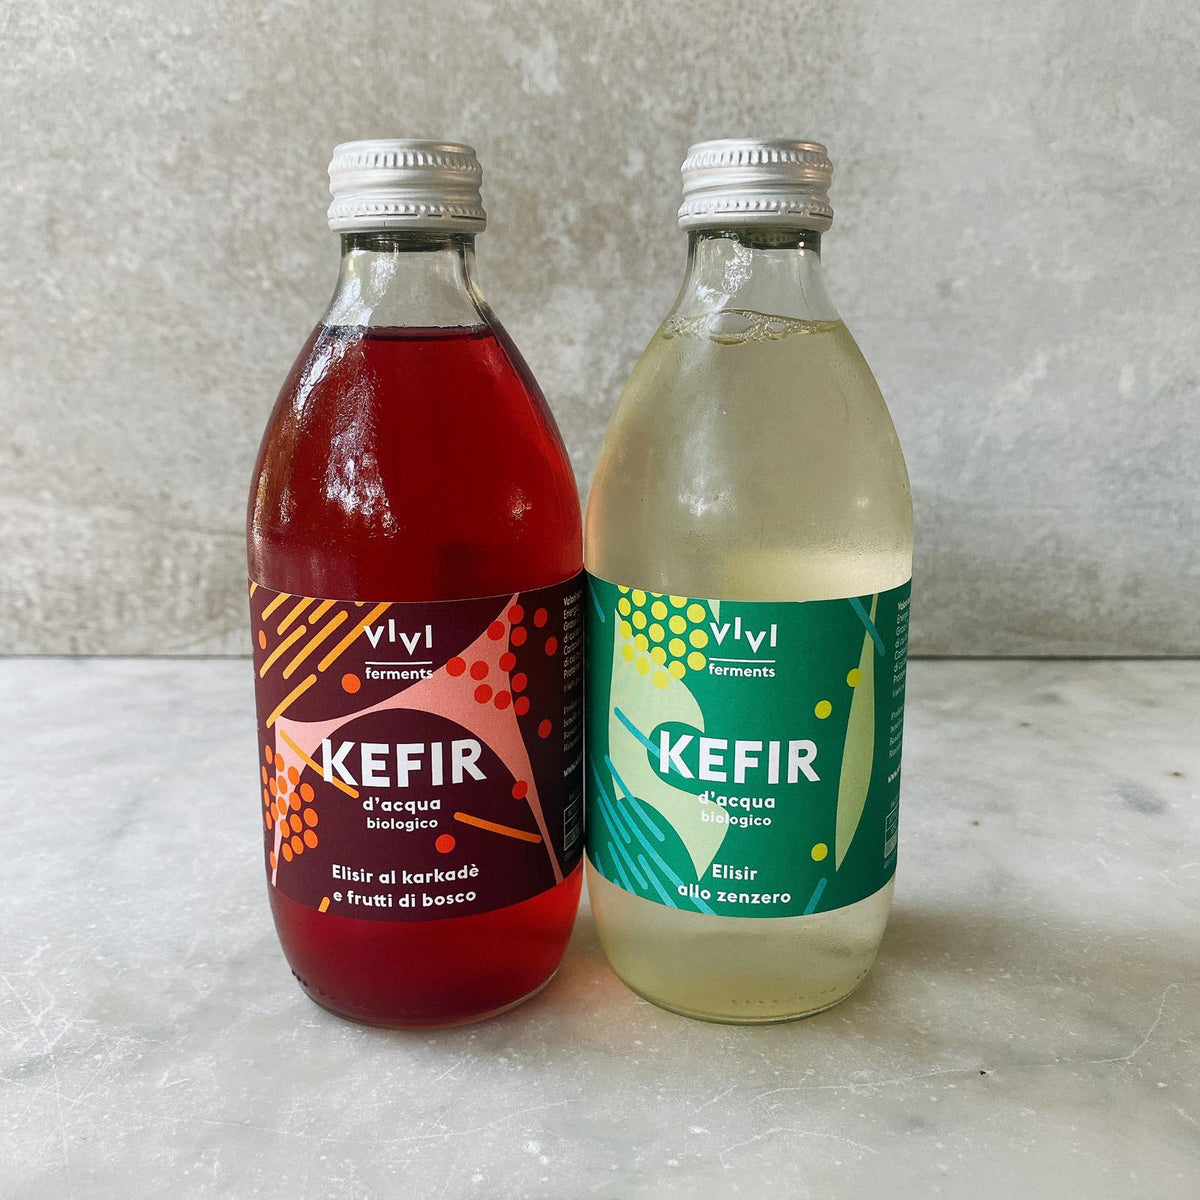 PACK KEFIR MISTI (12 bottiglie) – VIVI ferments